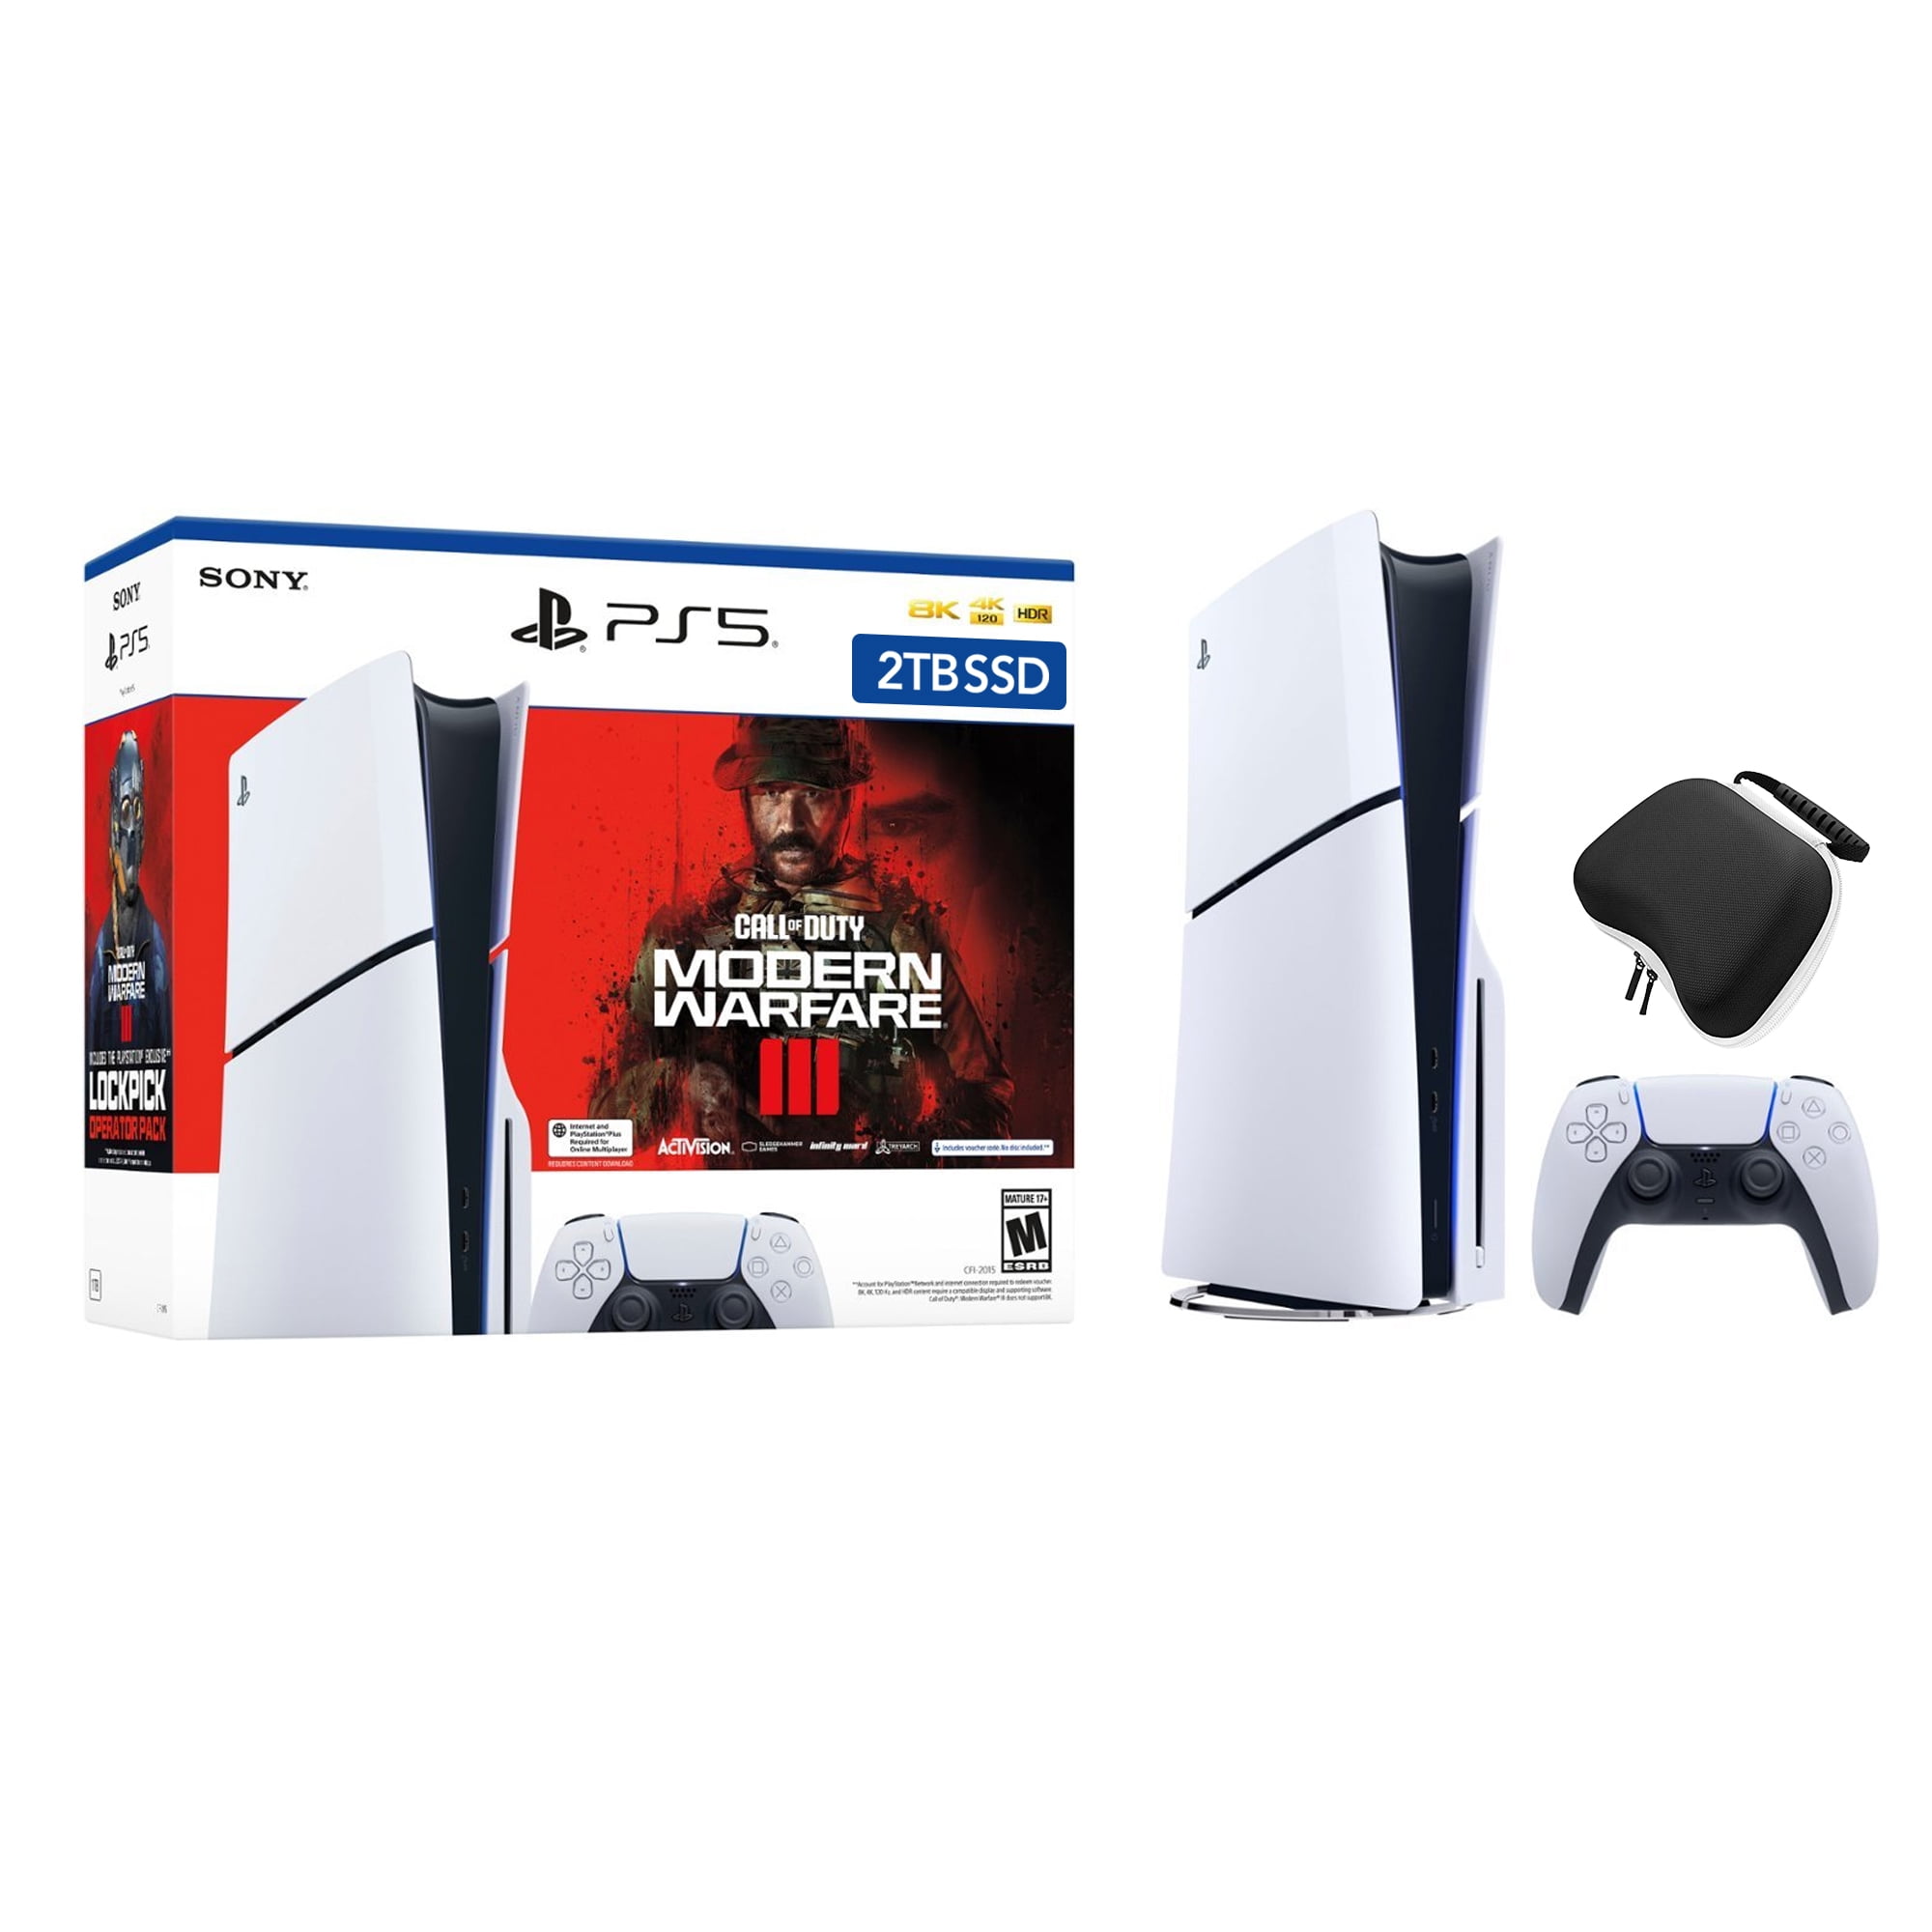 Sony Playstation PS5 DualSense Wireless Controller Marvel Spider-Man 2  1000039156 / CFI-ZCT1GZ2 - US